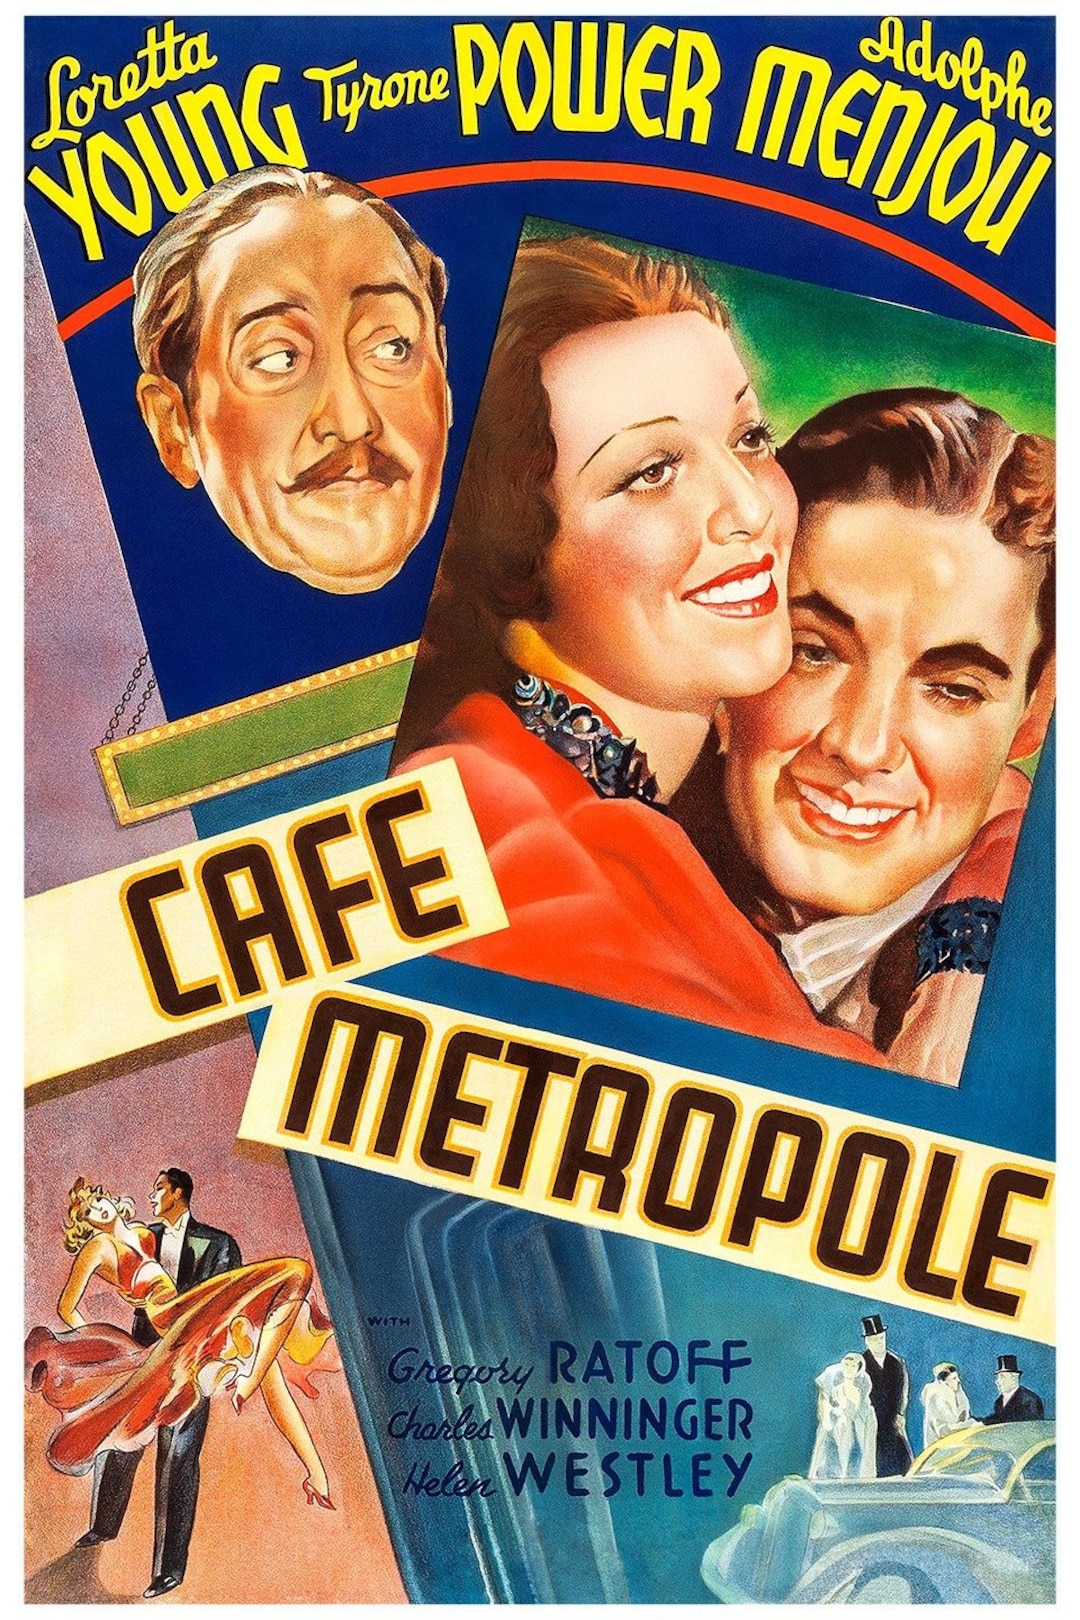 Cafe Metropole 1937 Loretta Young / Tyrone Power photo